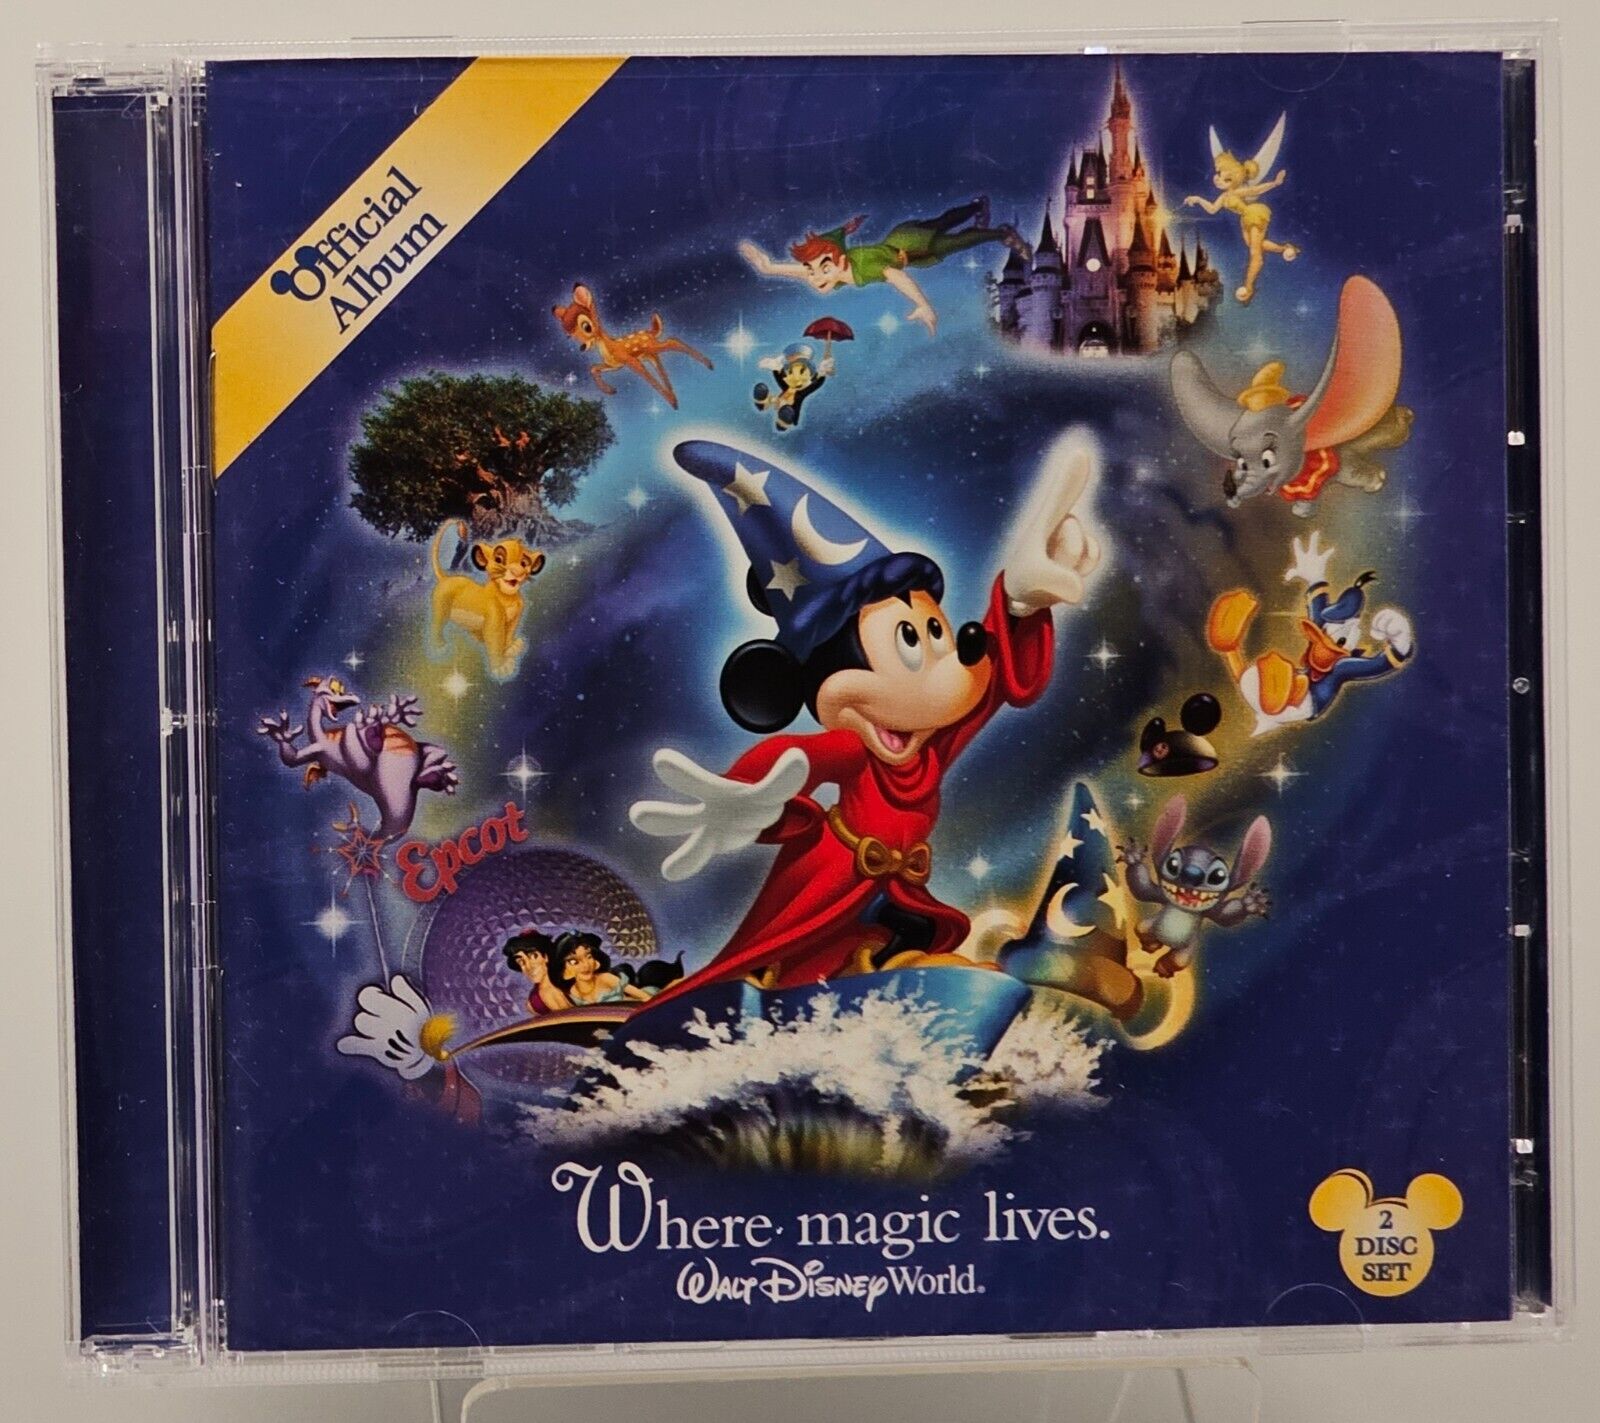 Where Magic Lives. Walt Disney World - Official Album - 2 Disc Set CD